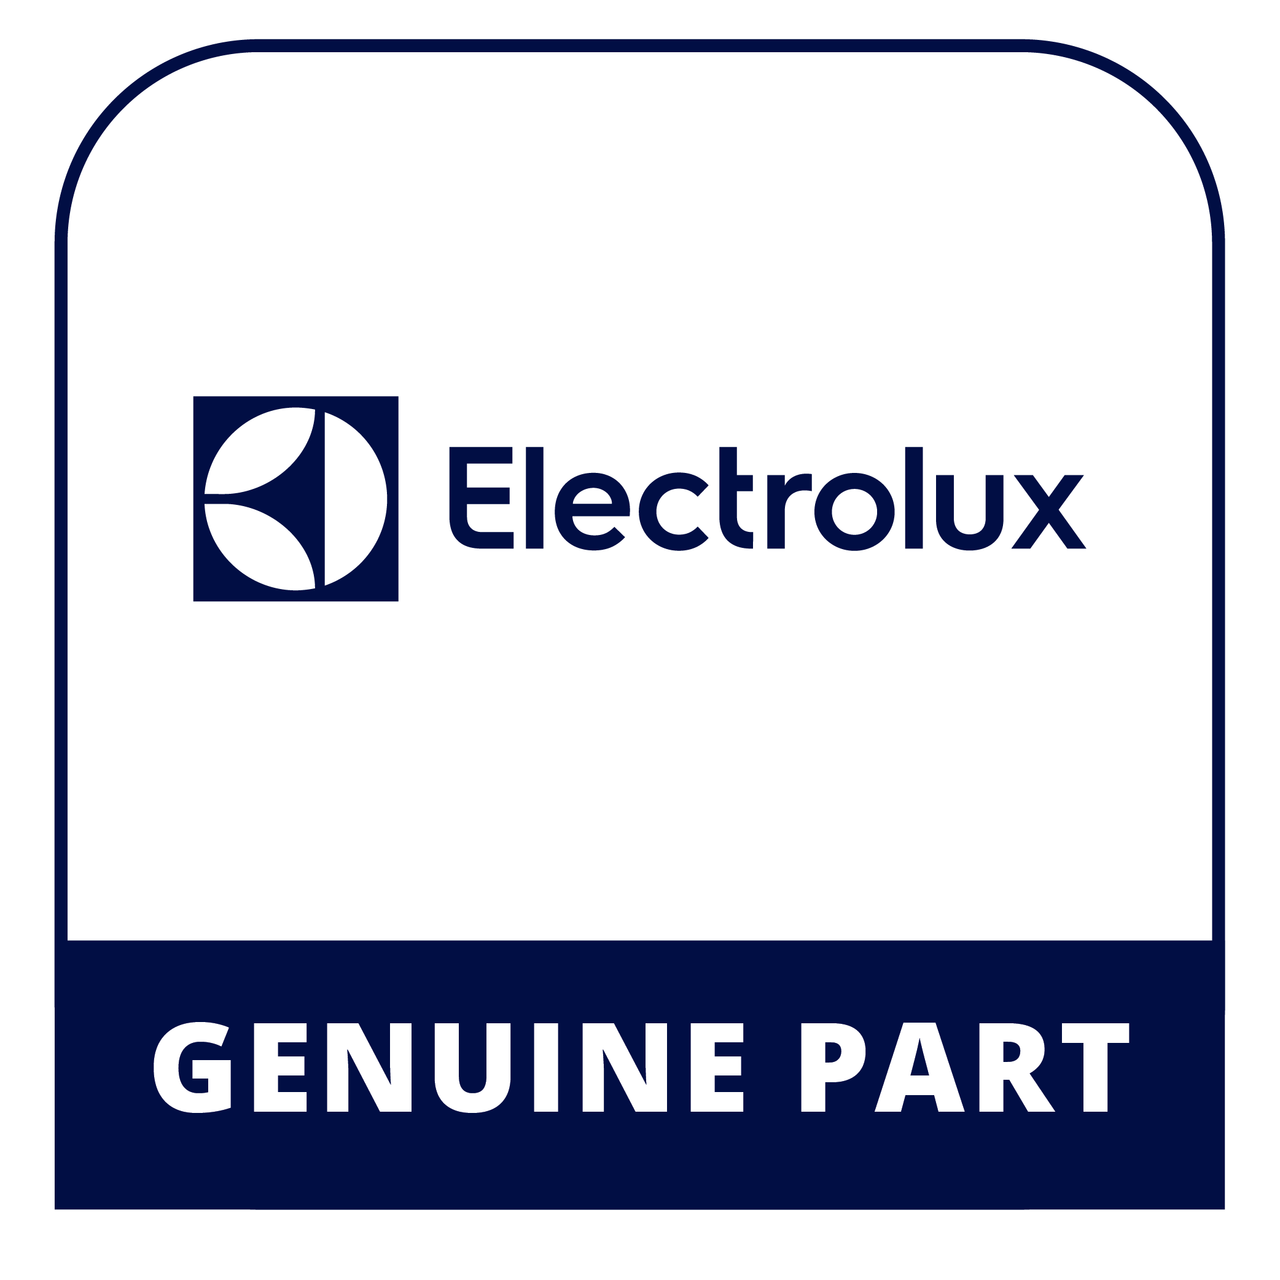 Frigidaire - Electrolux 136606100 Gasket - Genuine Electrolux Part